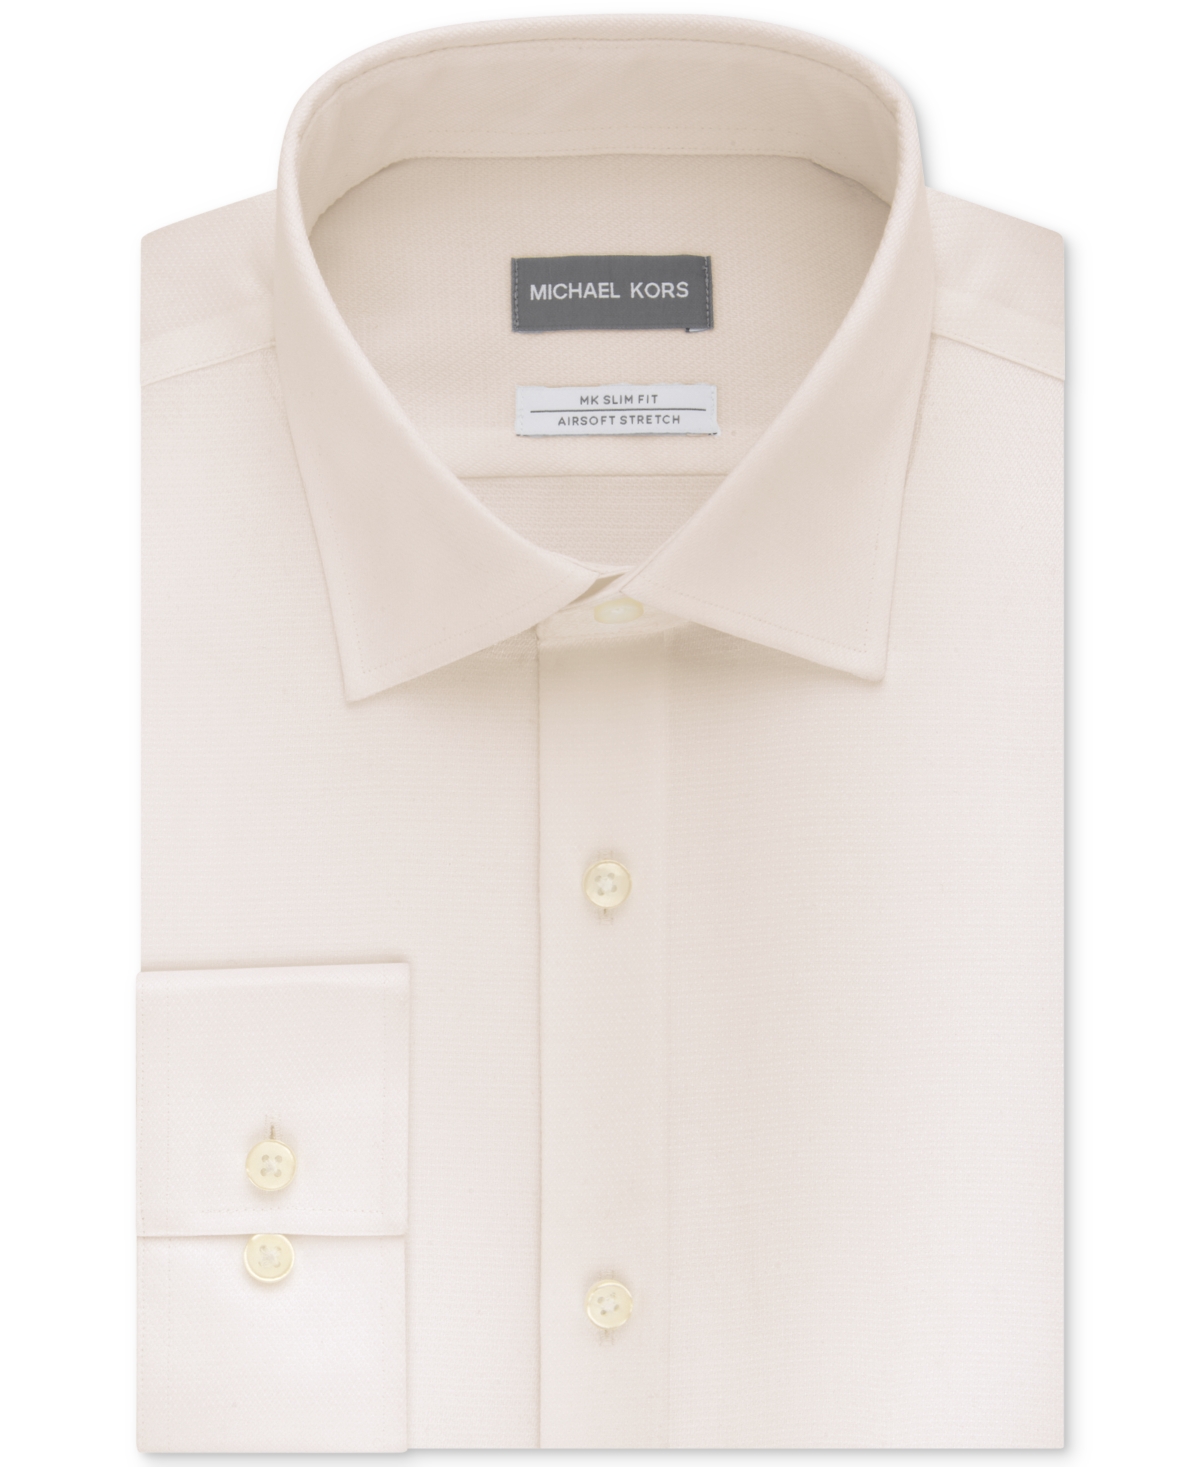 Michael Kors Men's Slim Fit Airsoft Performance Non-iron Dress Shirt In Ecru